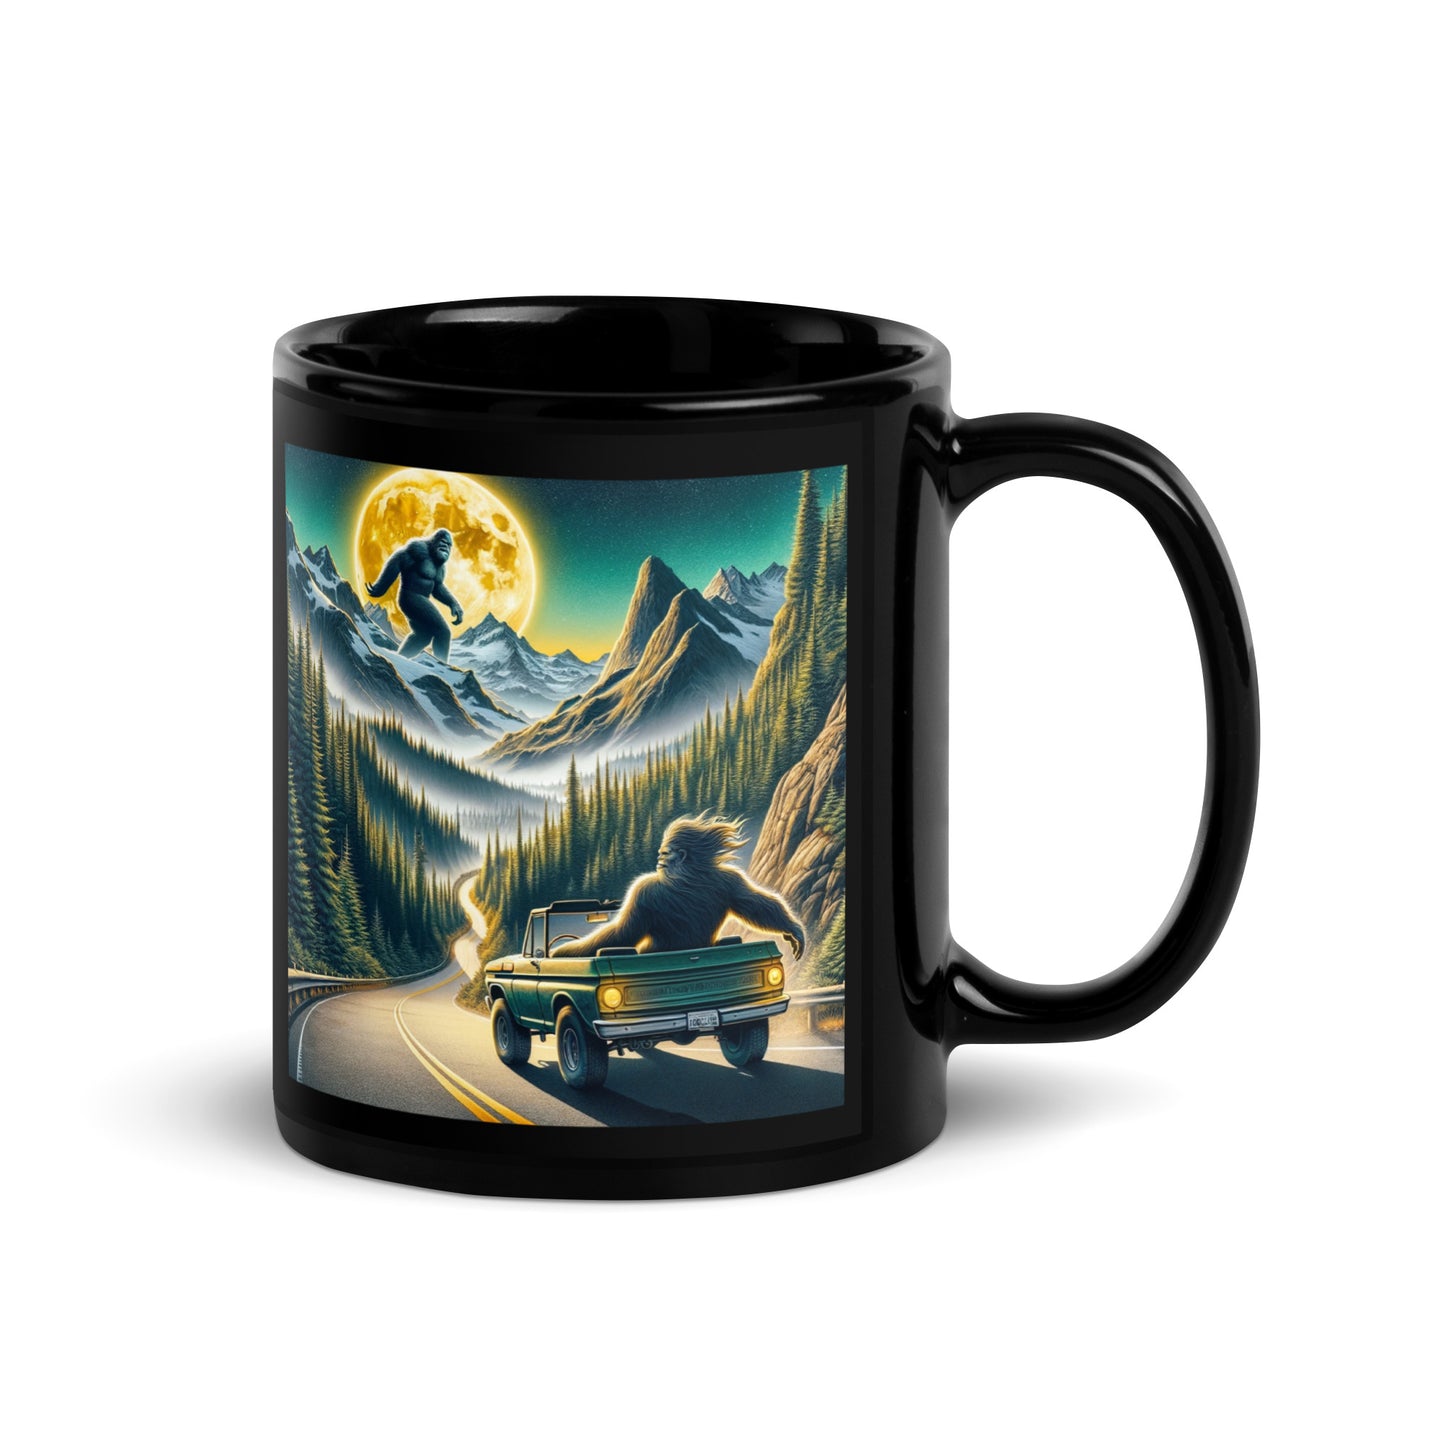 Moonlit Wildman Adventure Mug – Pacific Northwest Edition